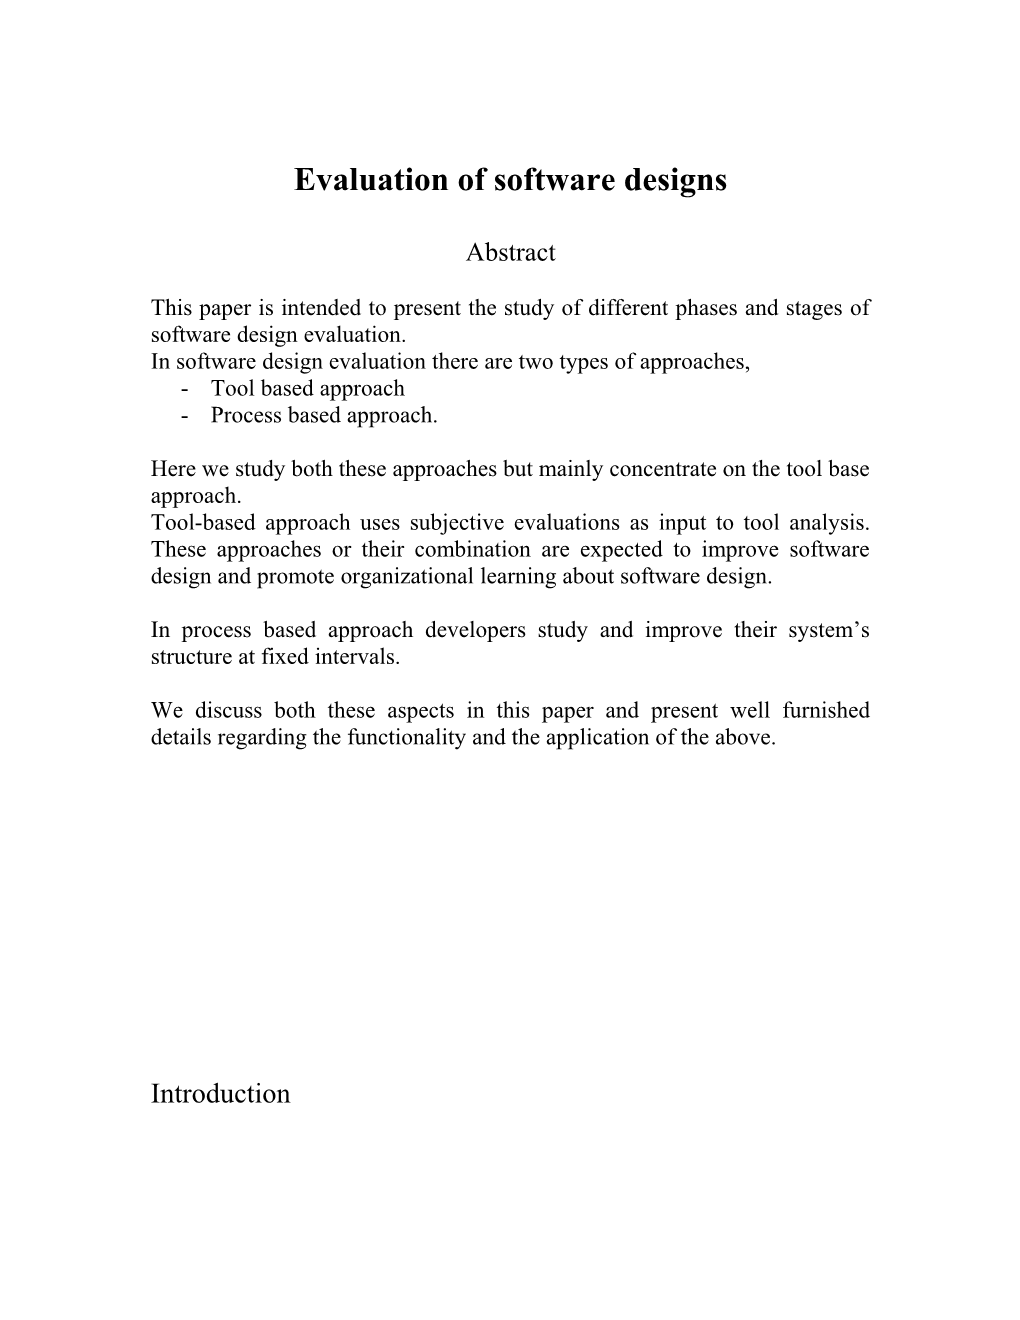 Evaluation of Software Designs